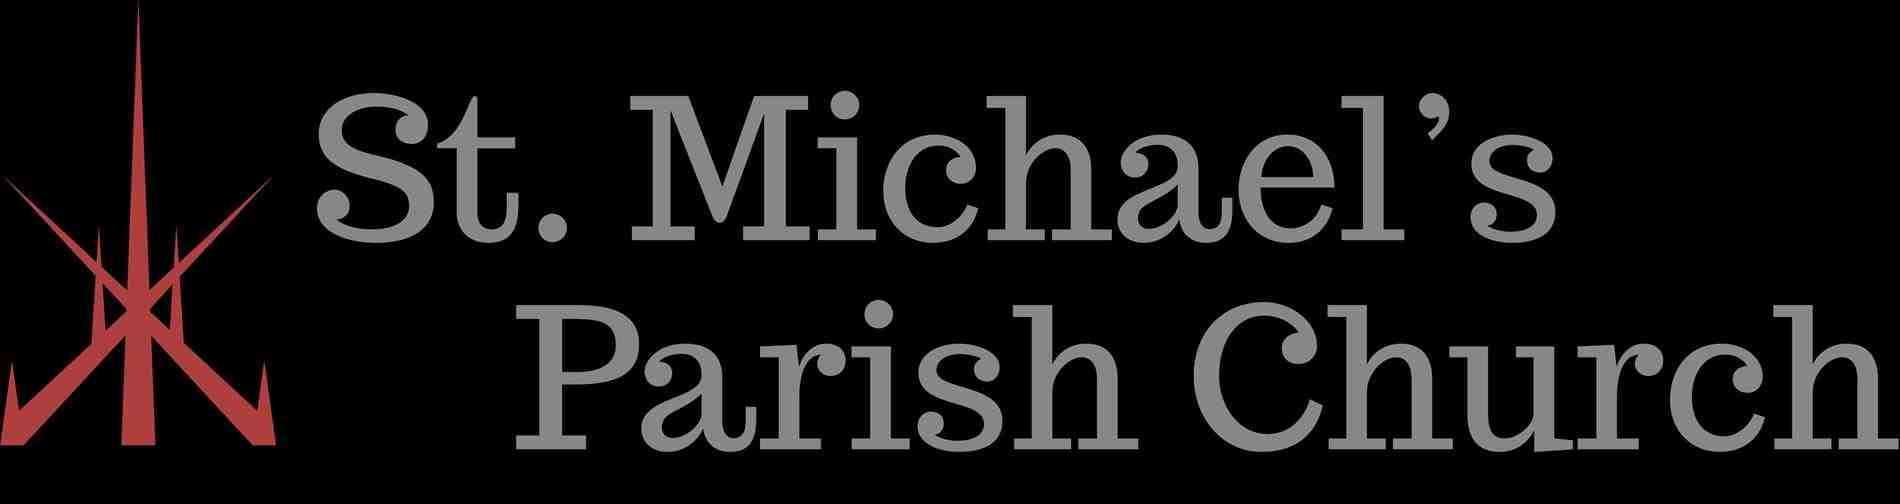 Michaels Crafts Logo - New Post Michaels Crafts Logo Trendingcheminee.website. HomeLivings